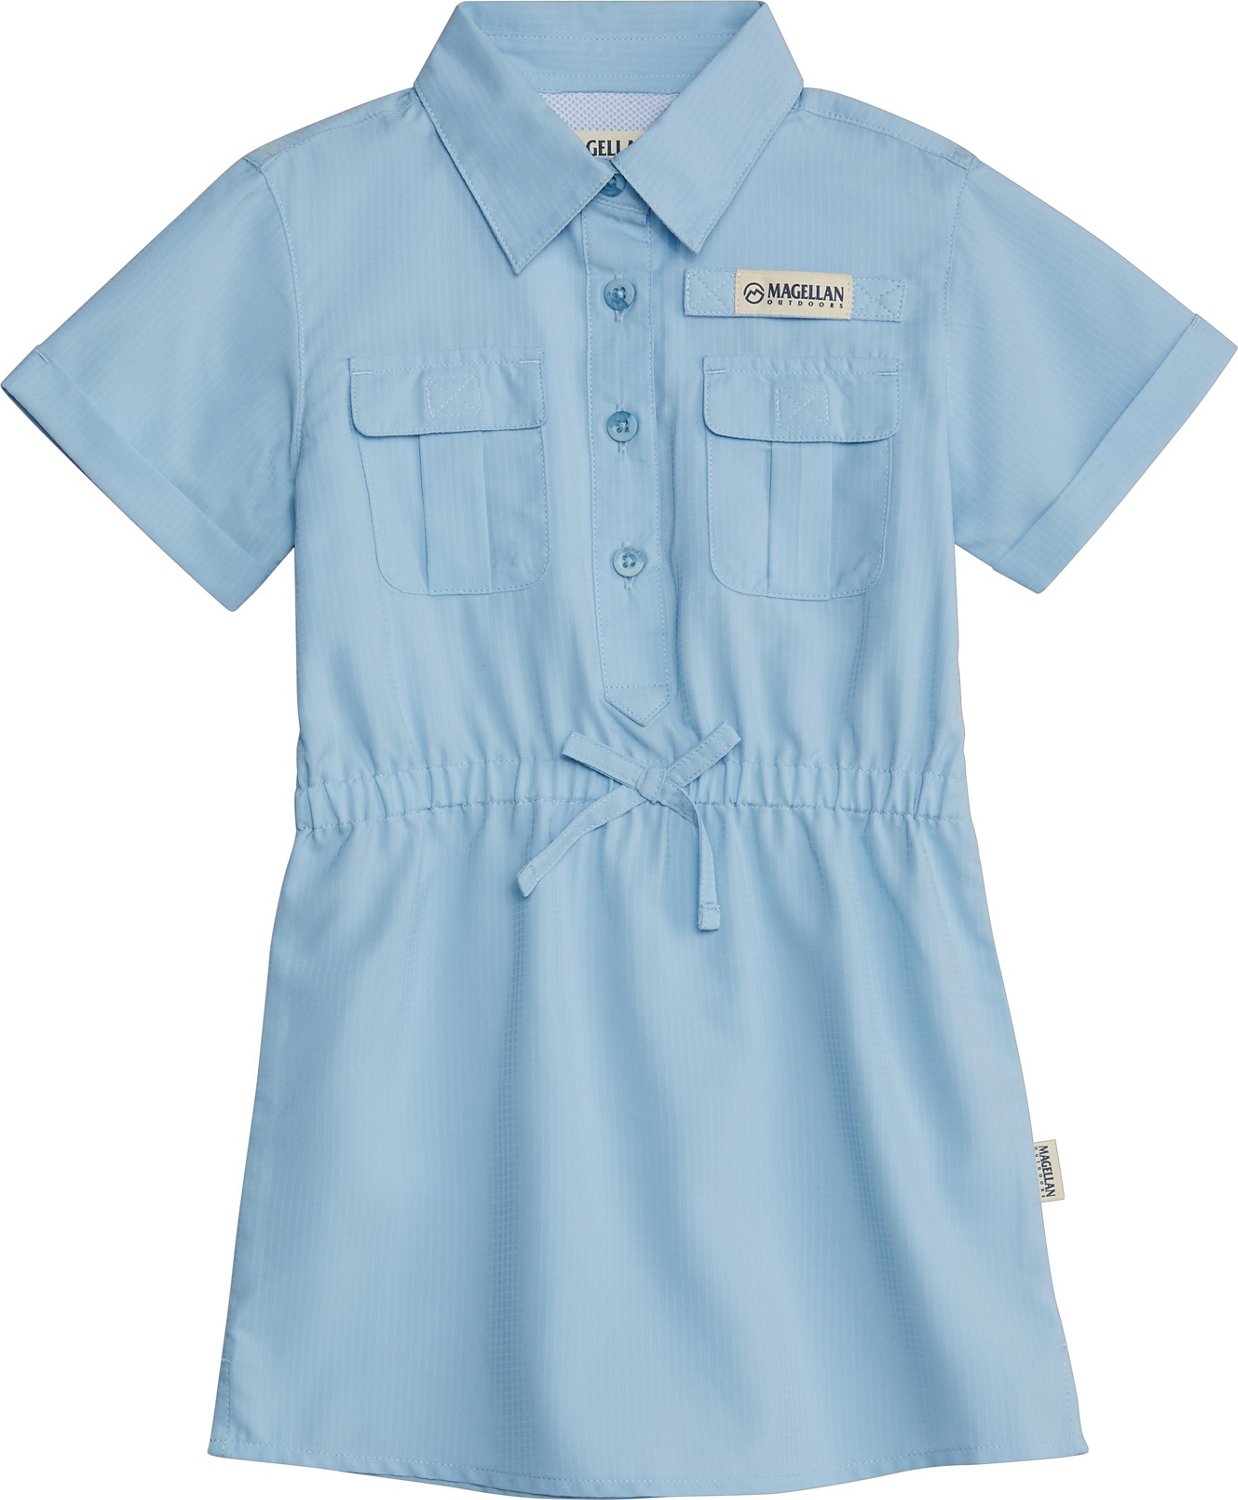 Magellan Outdoors Girls' 4-7 Southern Summer Fishing Shirt Dress